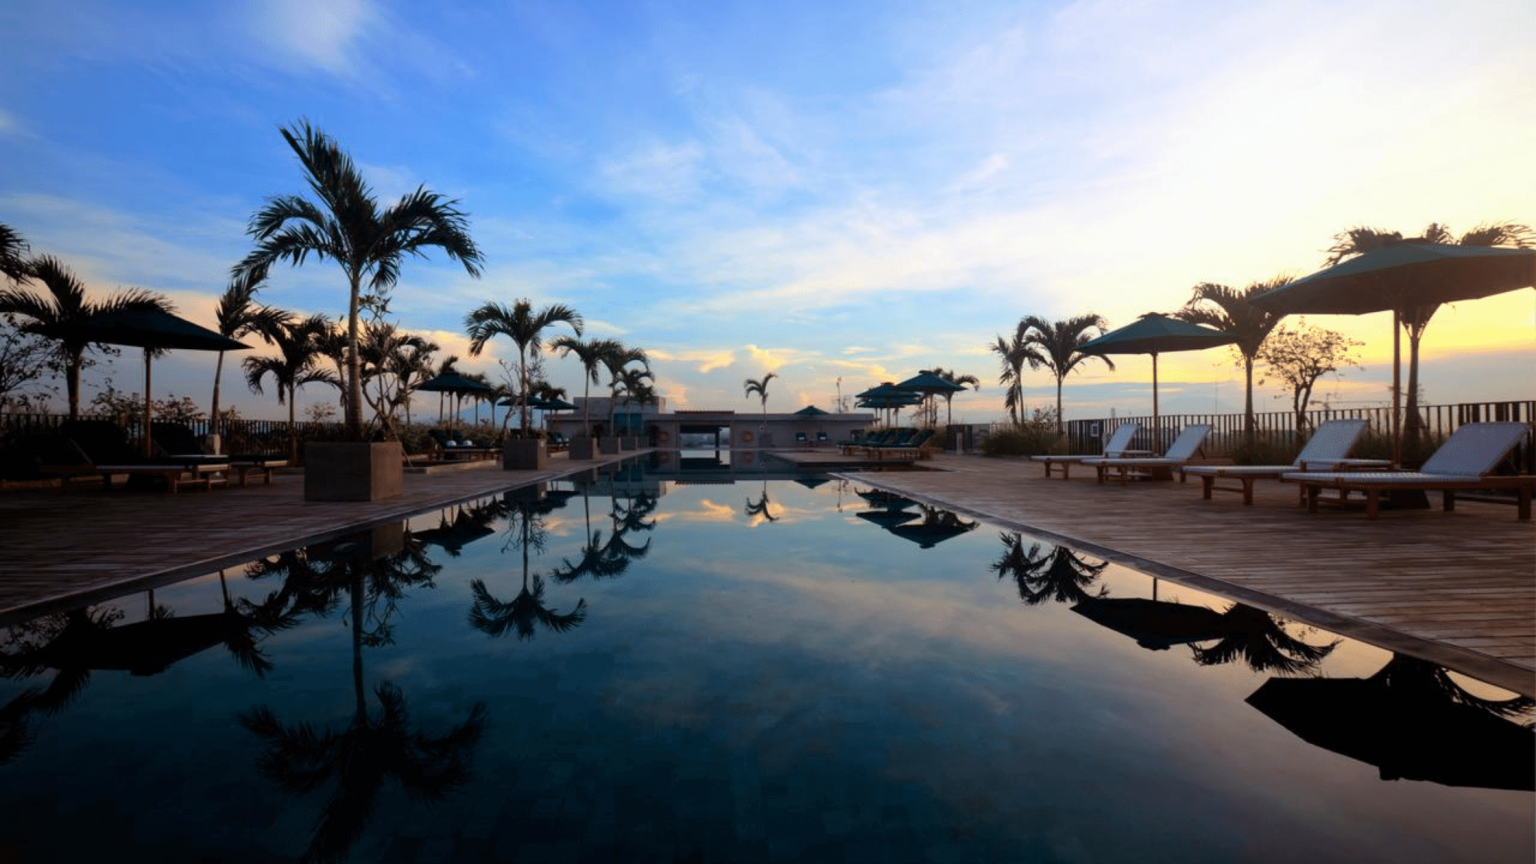 Where To Stay In Seminyak Bali? 7 Best Seminyak Hotels 2022